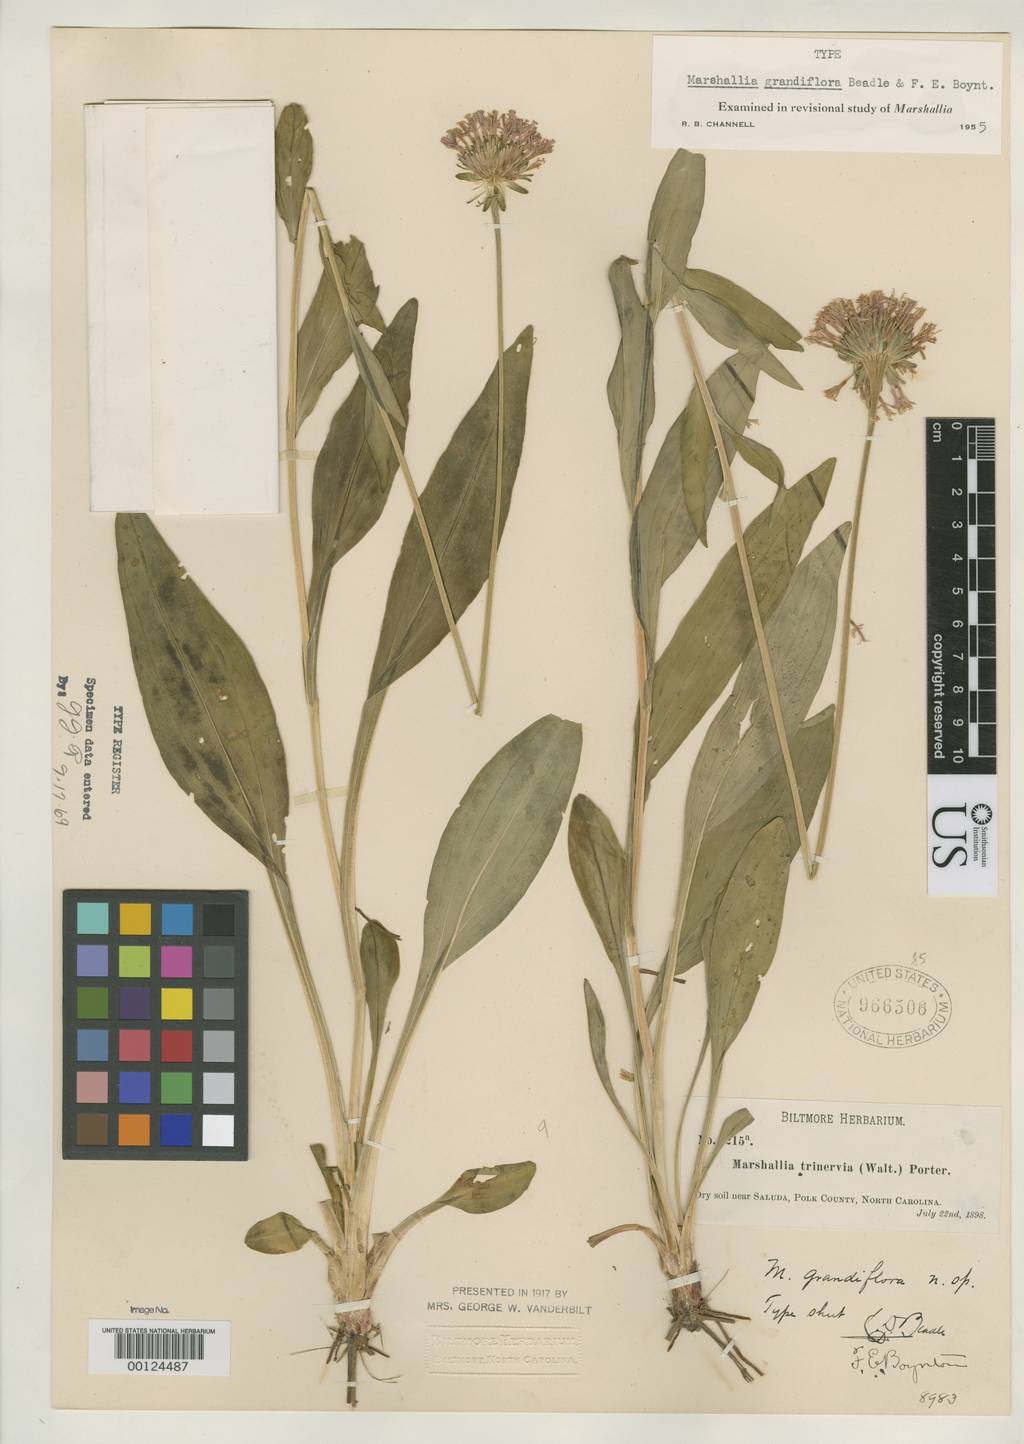 Marshallia grandiflora